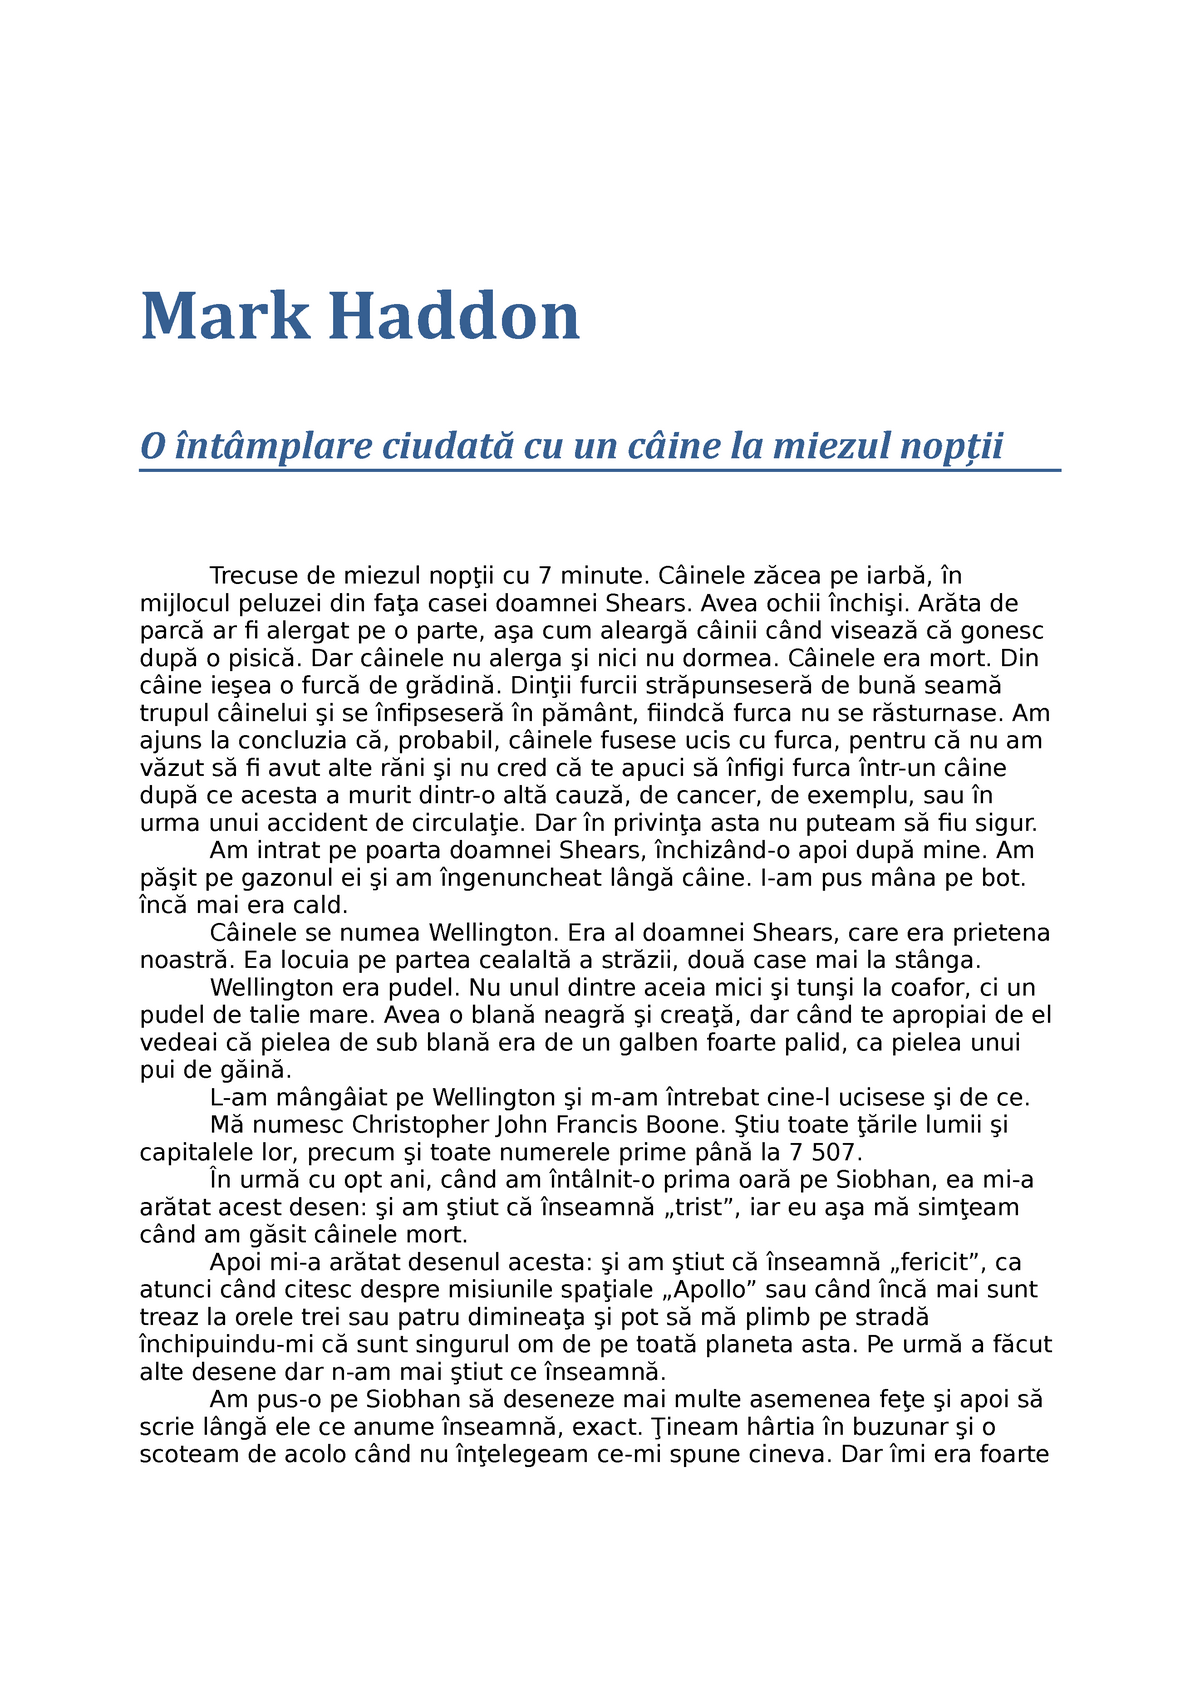 Mark Haddon O Intamplare Ciudata Cu Un Caine La Miezul Noptii